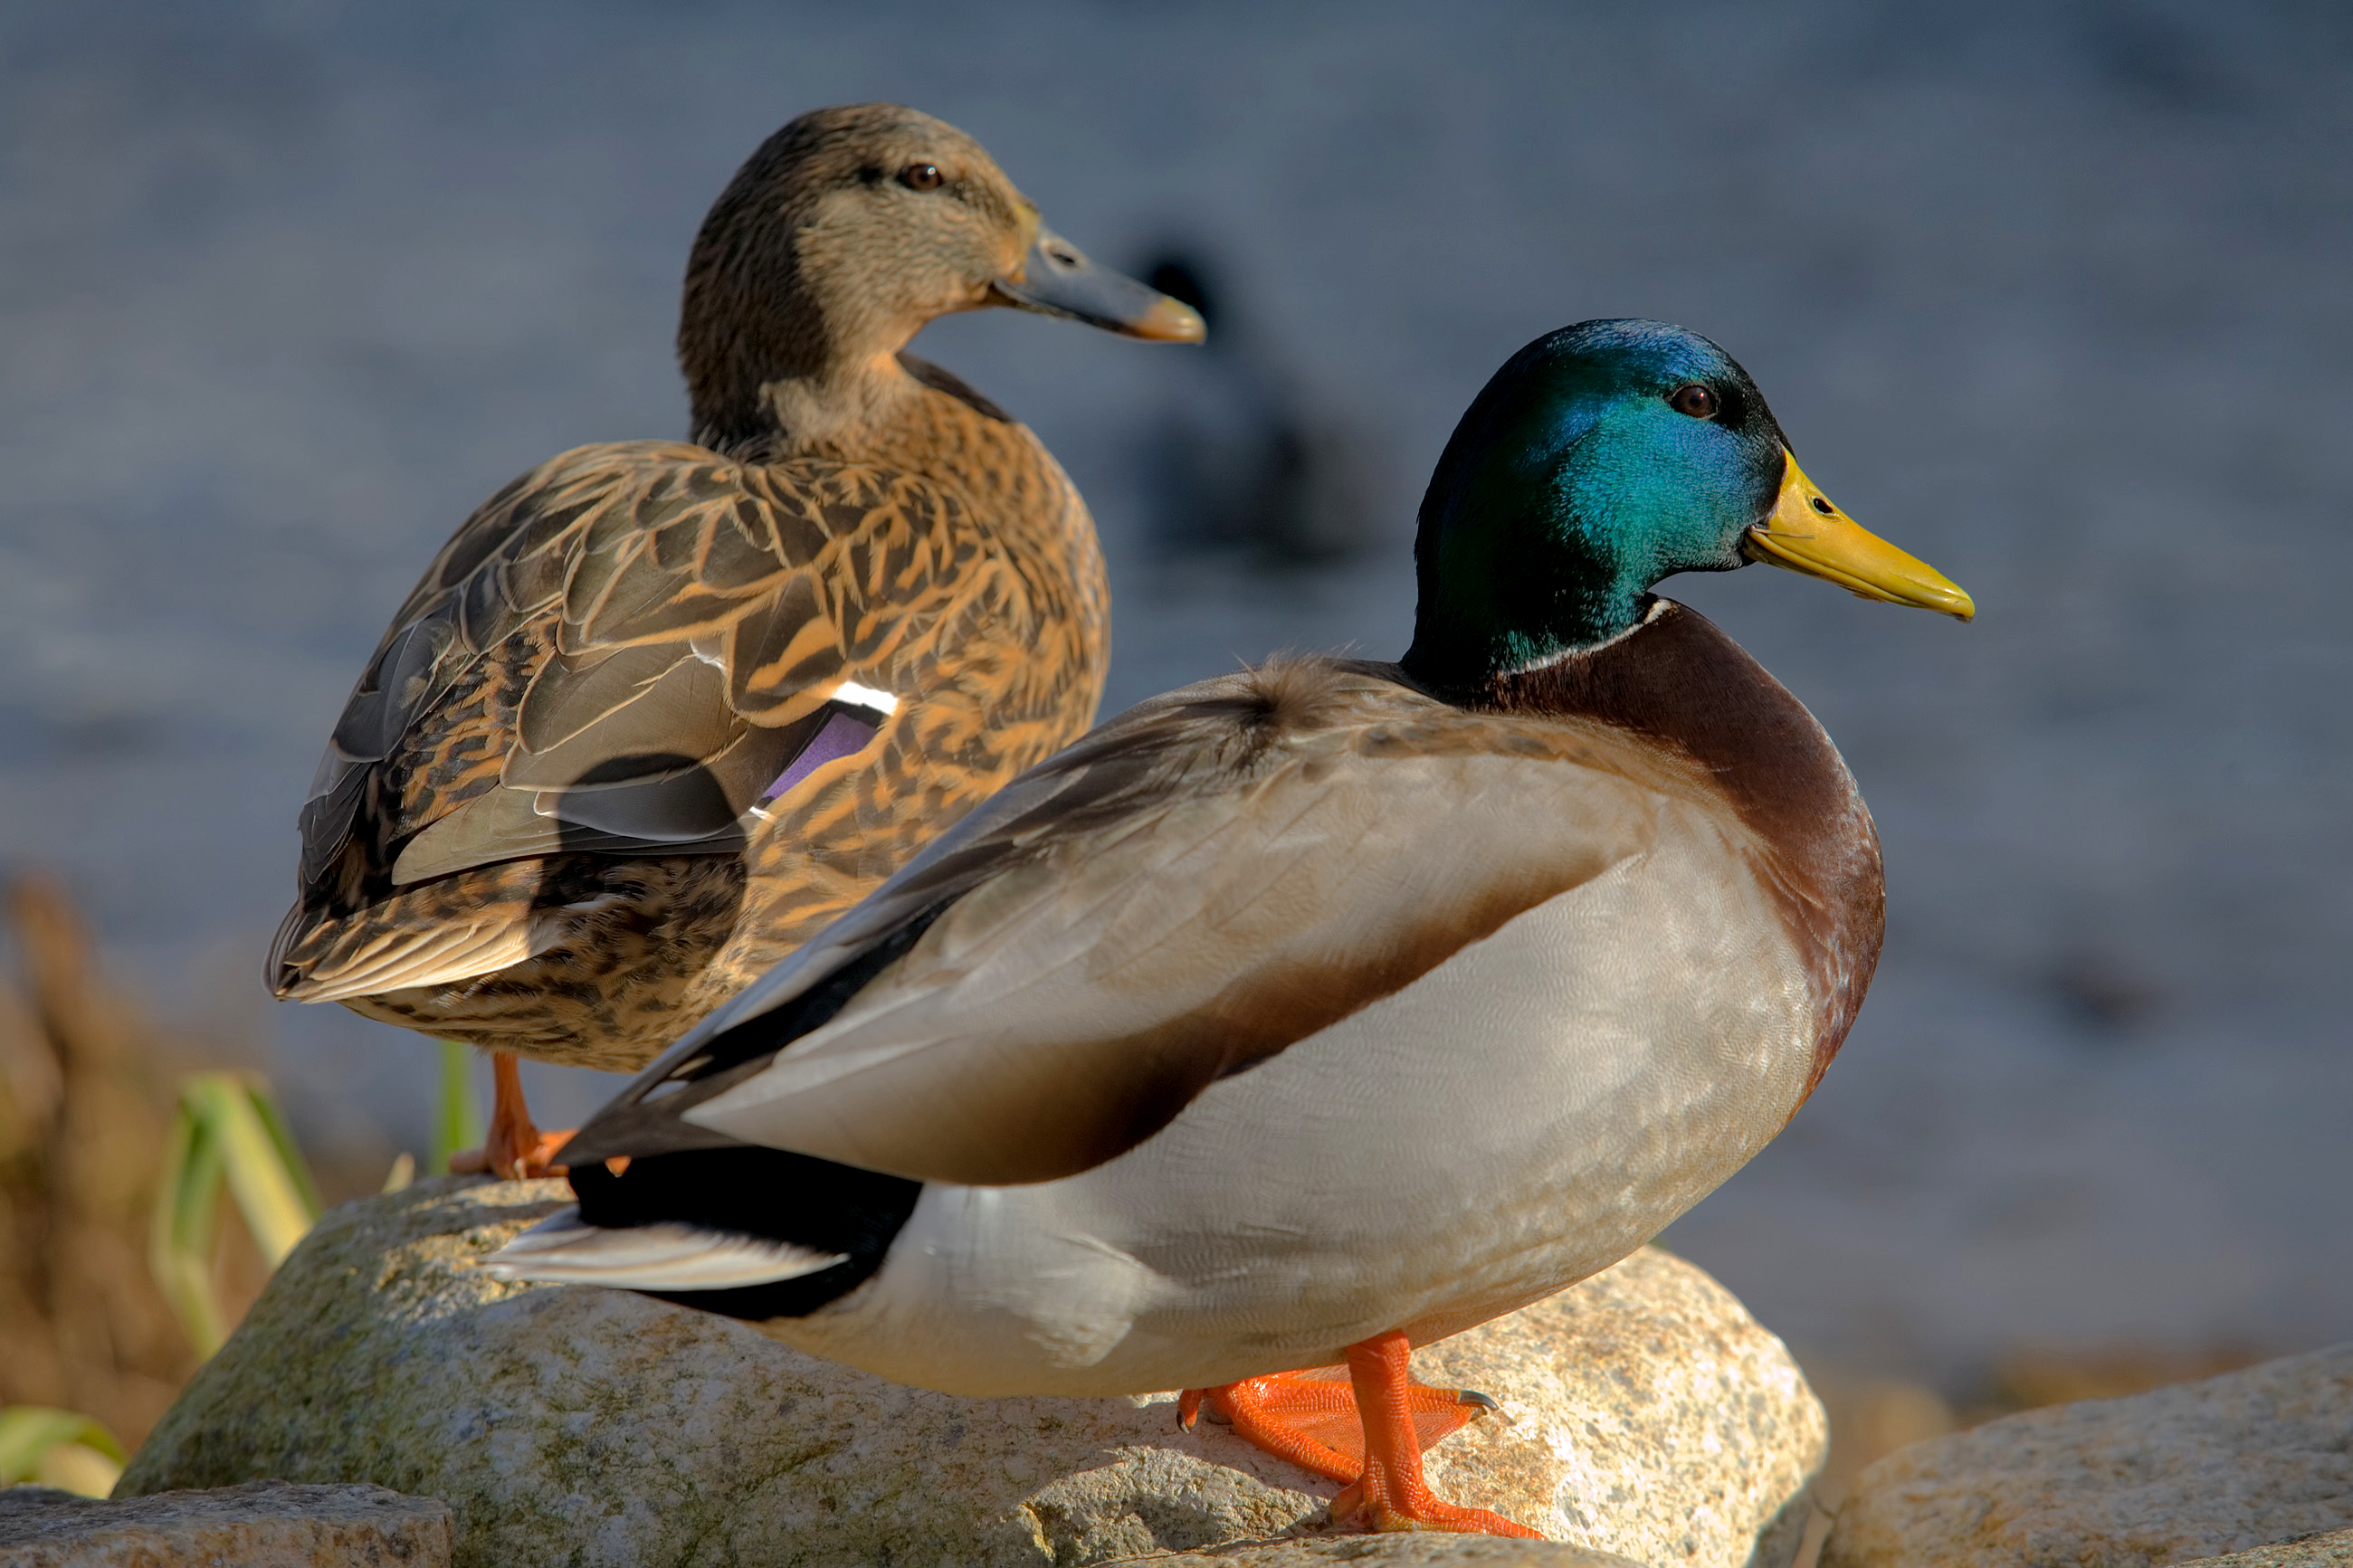 Wikipedia:Featured picture candidates/Two Mallard ducks - Wikipedia